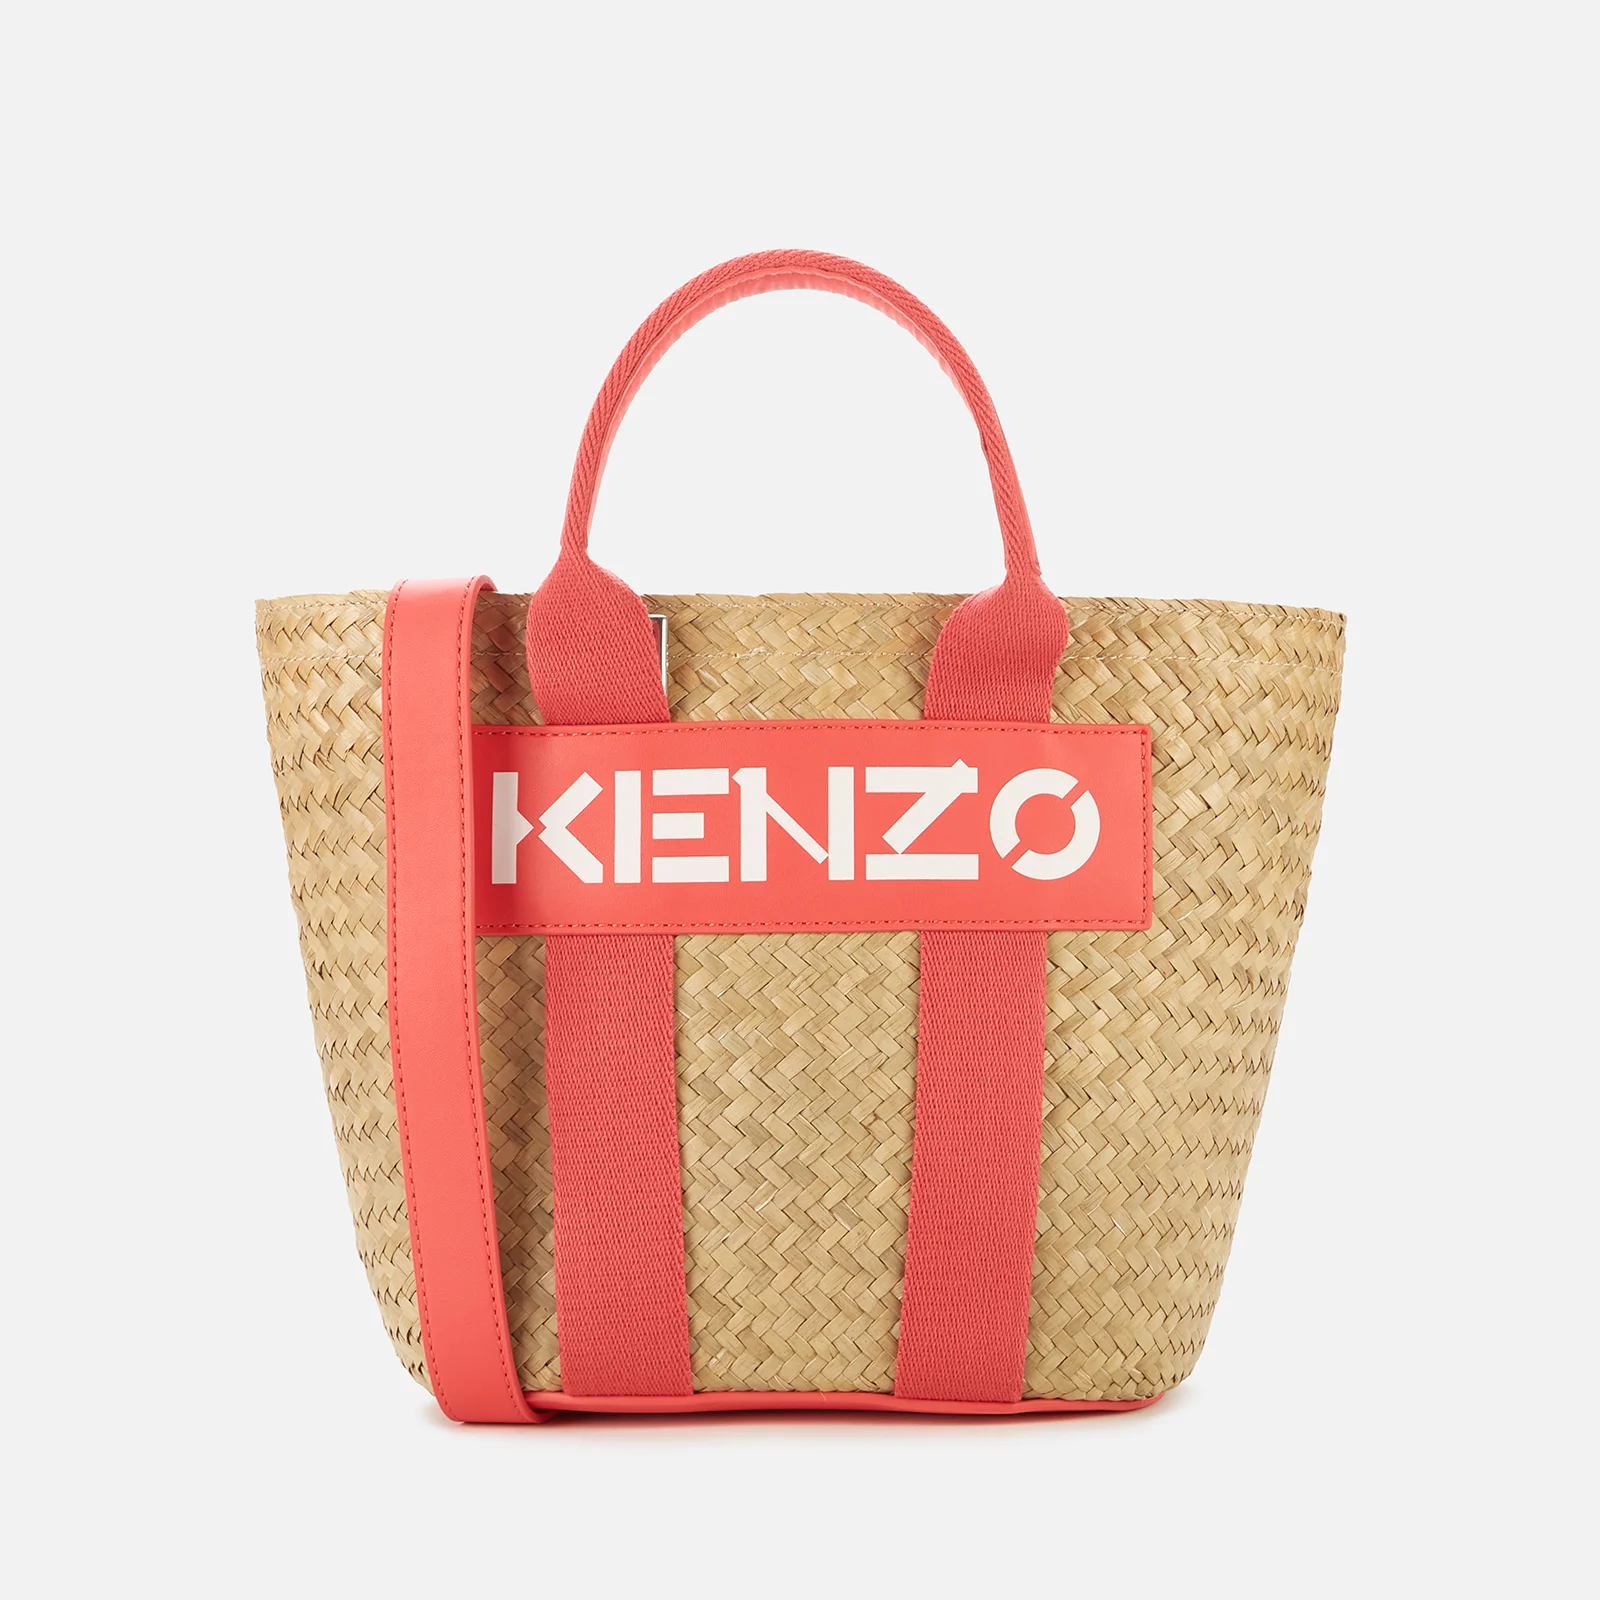 KENZO Women's Kabana Small Basket - Coral Image 1